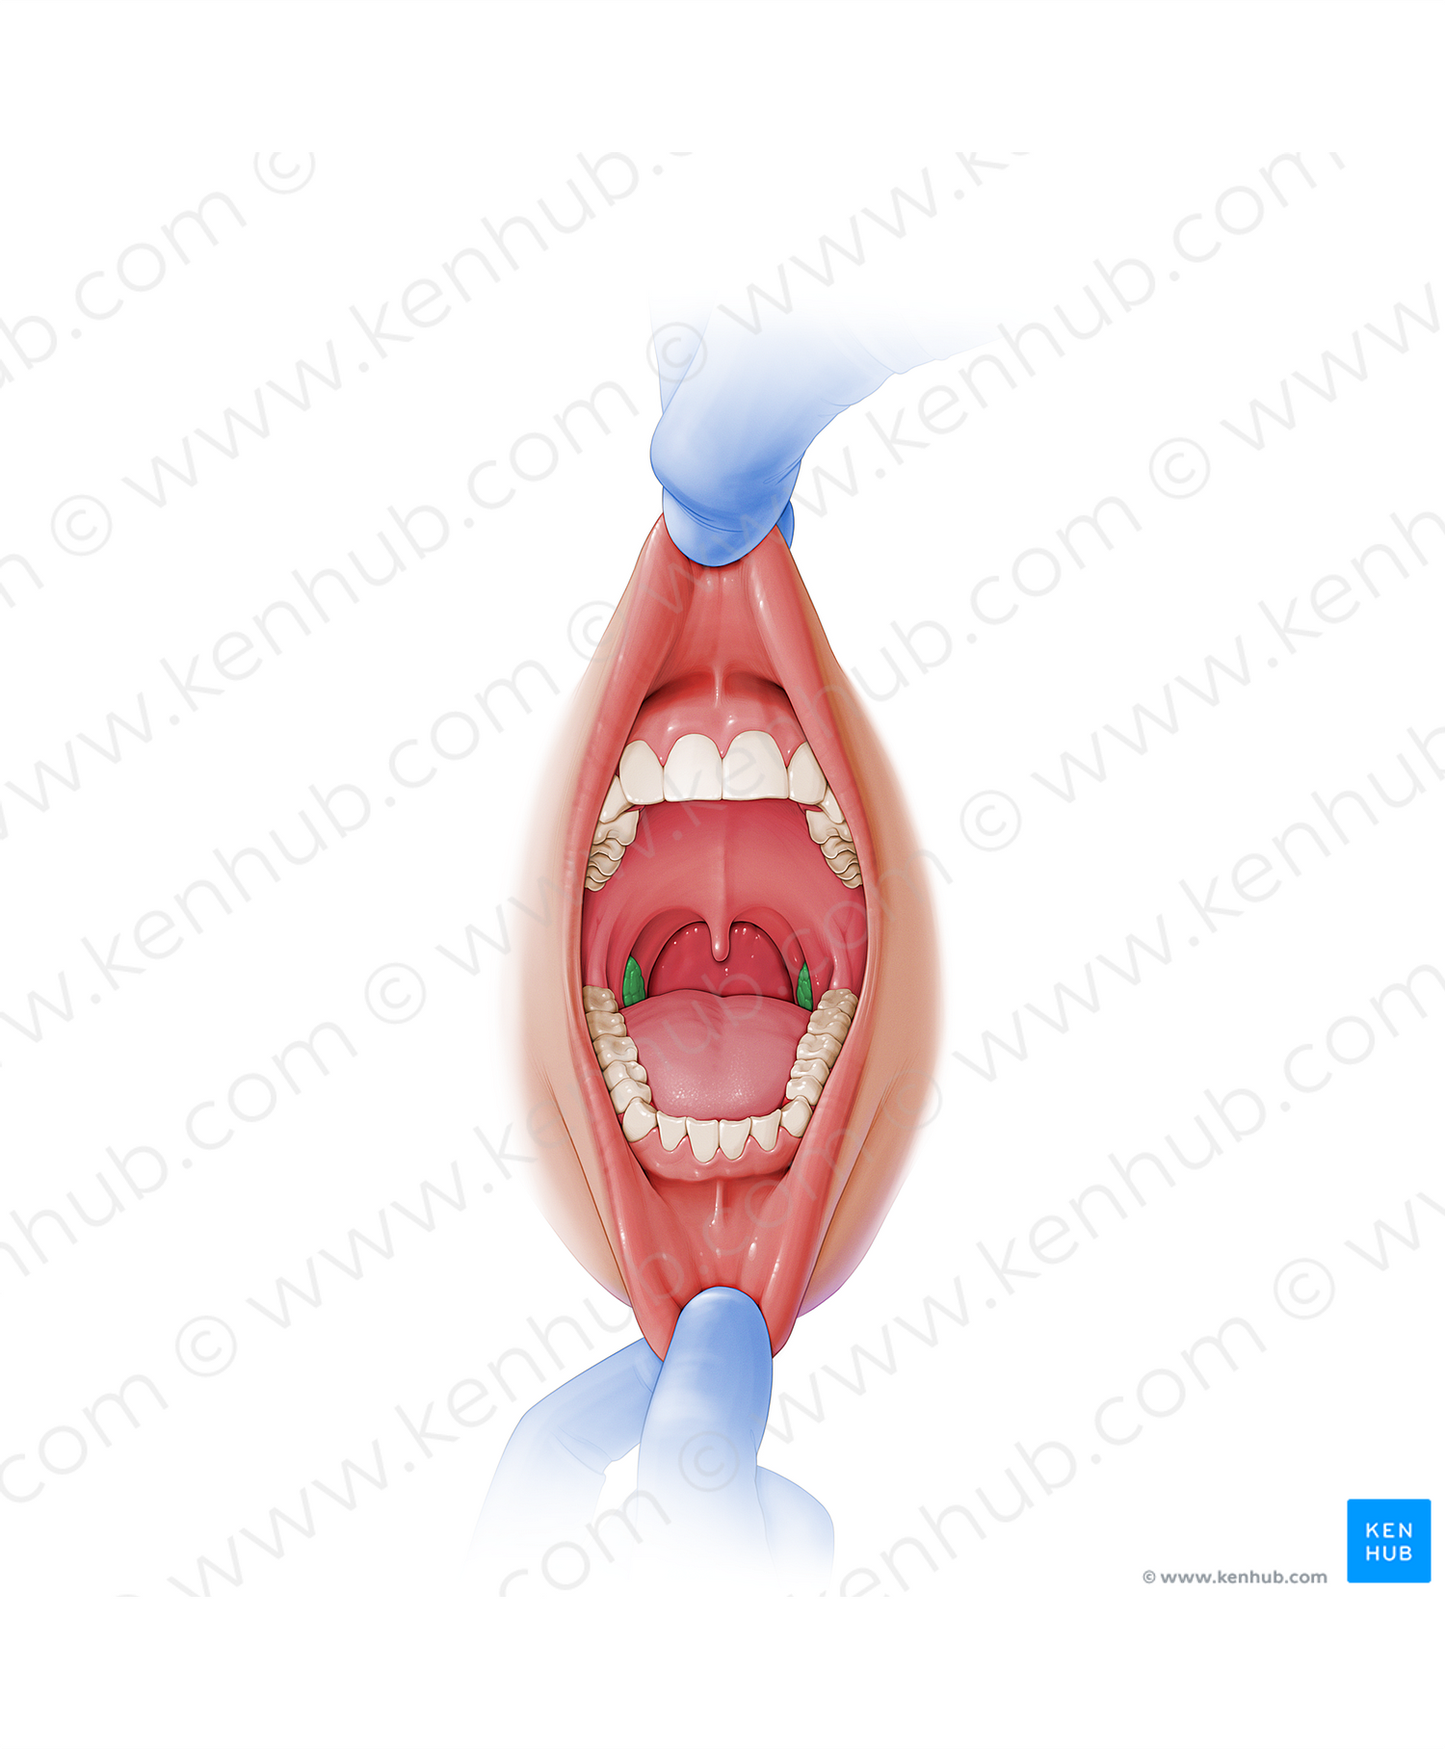 Palatine tonsil (#9474)